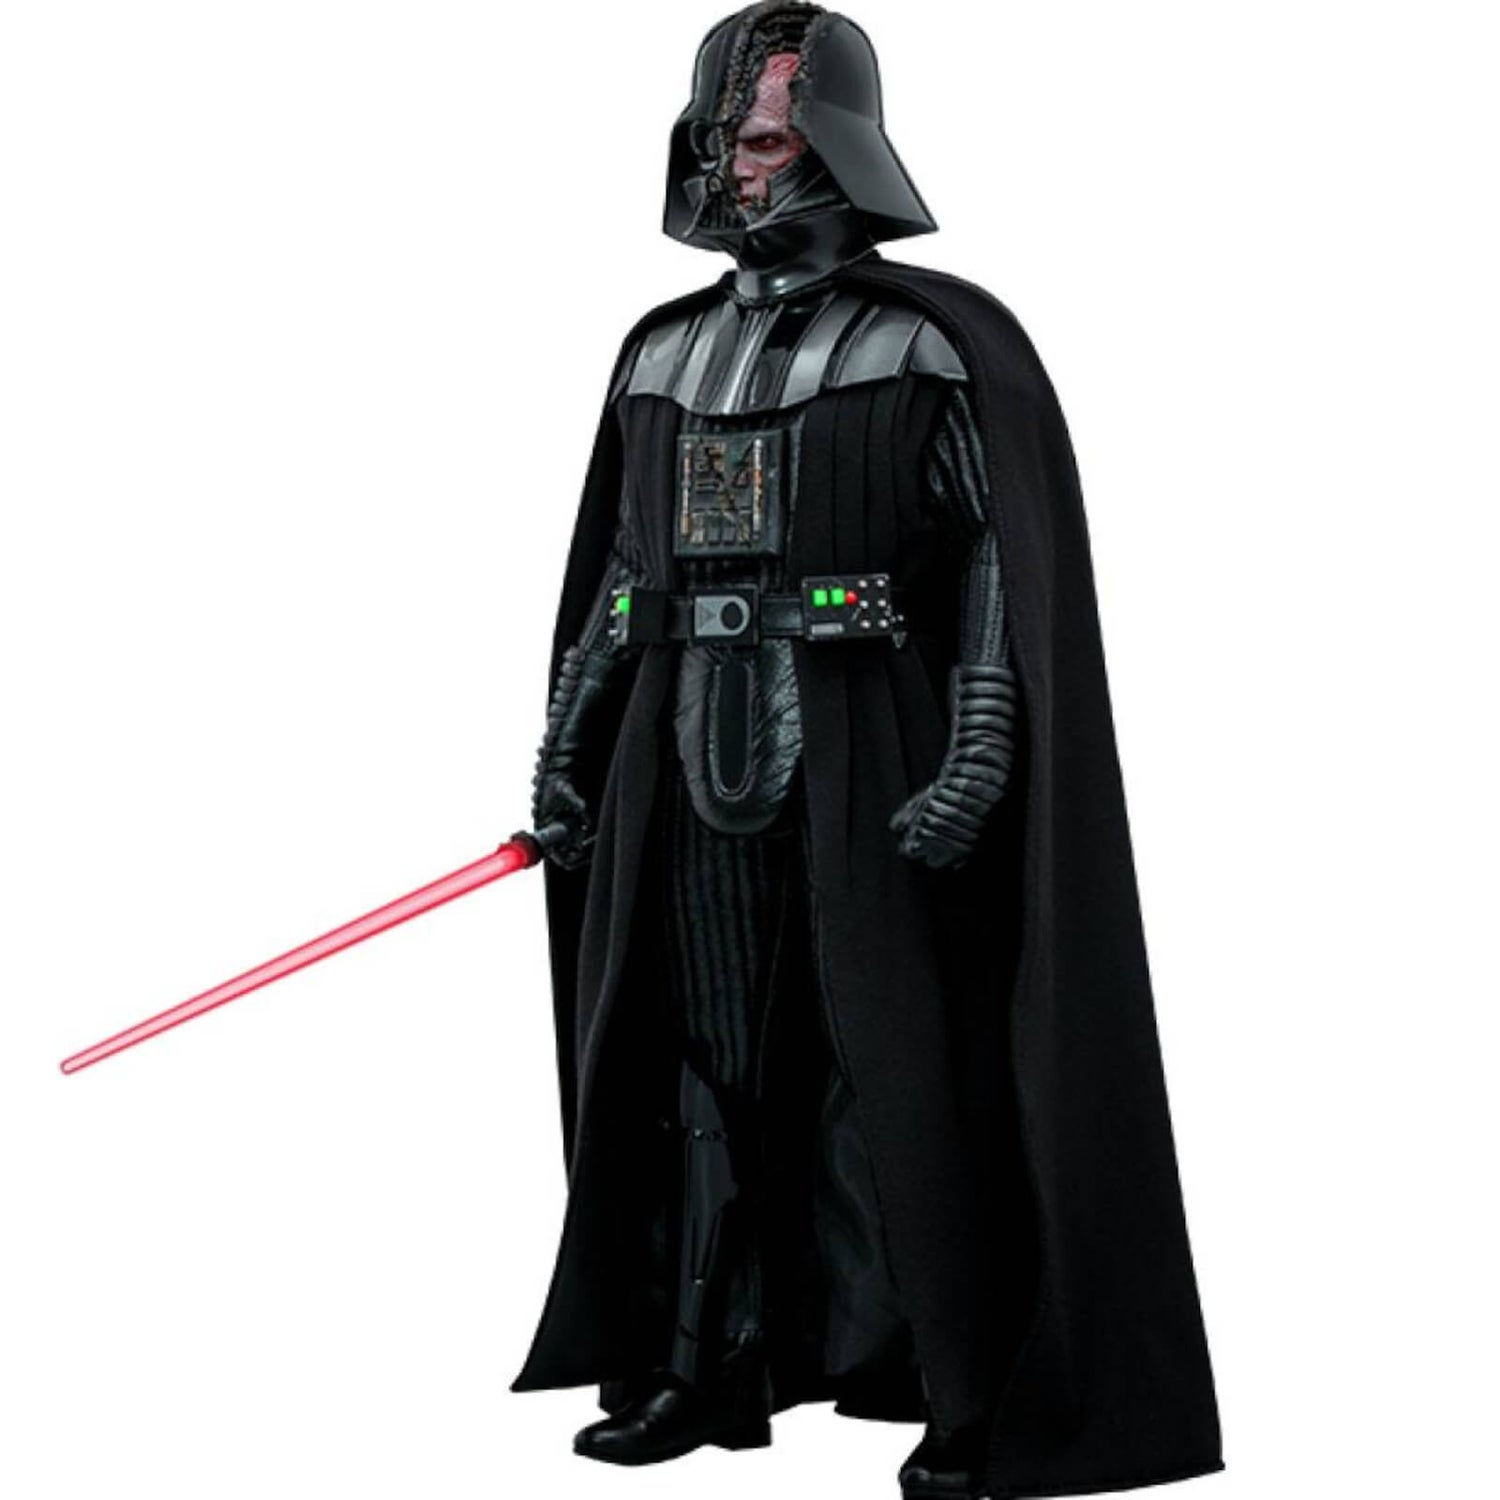 Hot Toys Star Wars: Obi-Wan Kenobi Action Figure 1/6 Darth Vader Deluxe Version 35cm